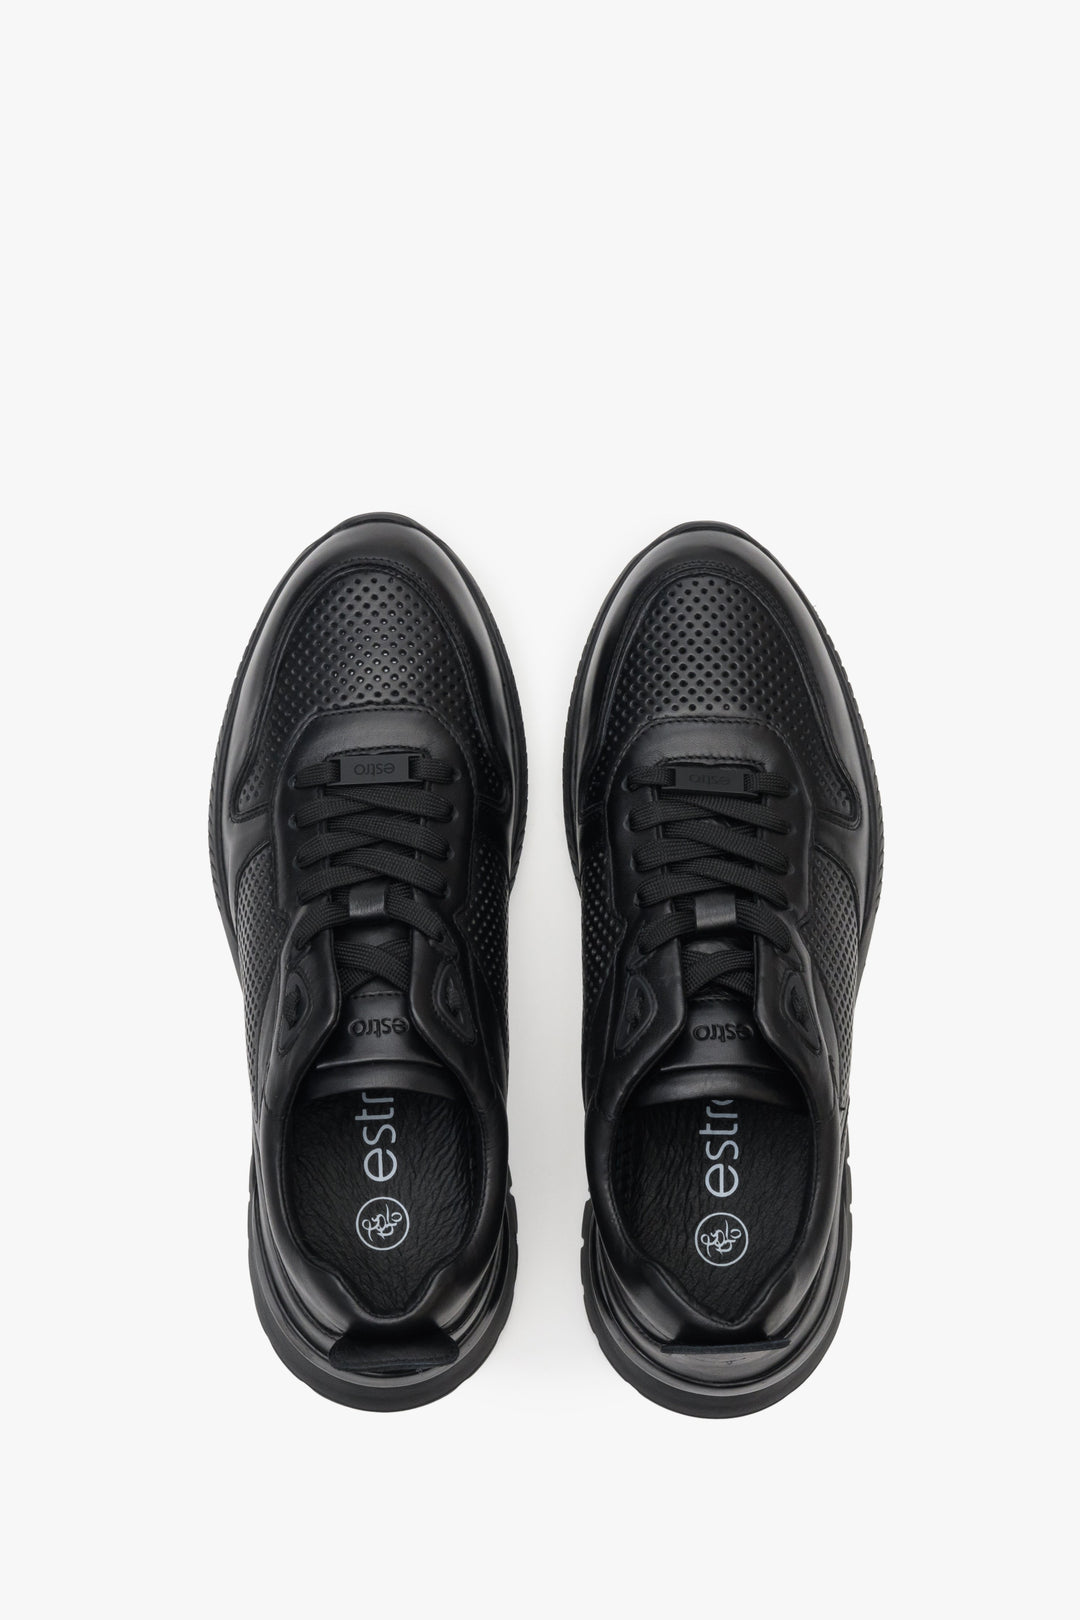 Men's black perforated sneakers for summer Estro.